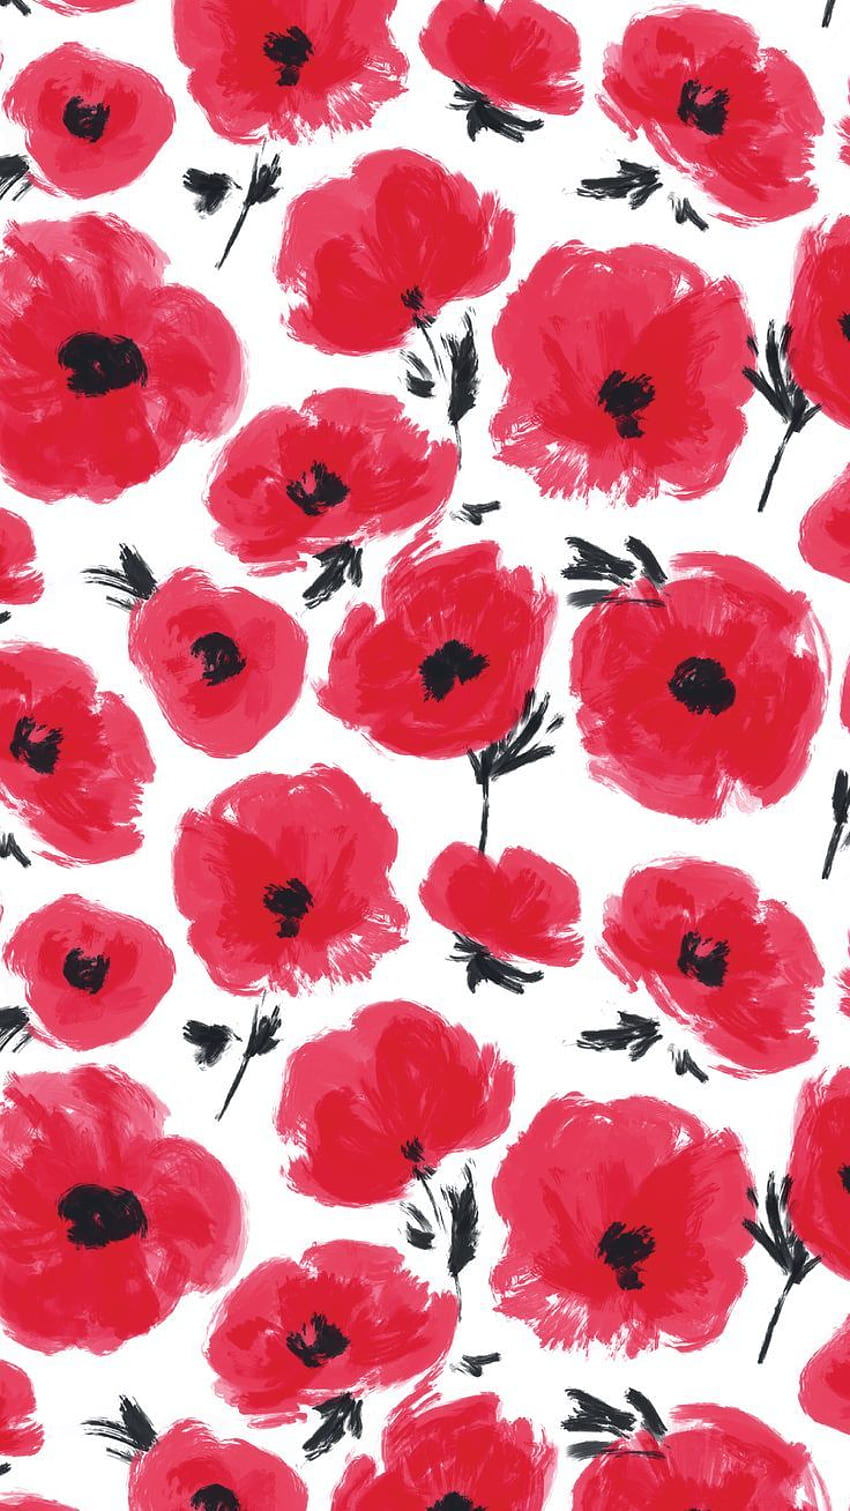 Teléfono Red Poppies ::Haga clic aquí para refrescarse: Red Poppi. iPhone floral, amapola, flor, rojo lindo fondo de pantalla del teléfono